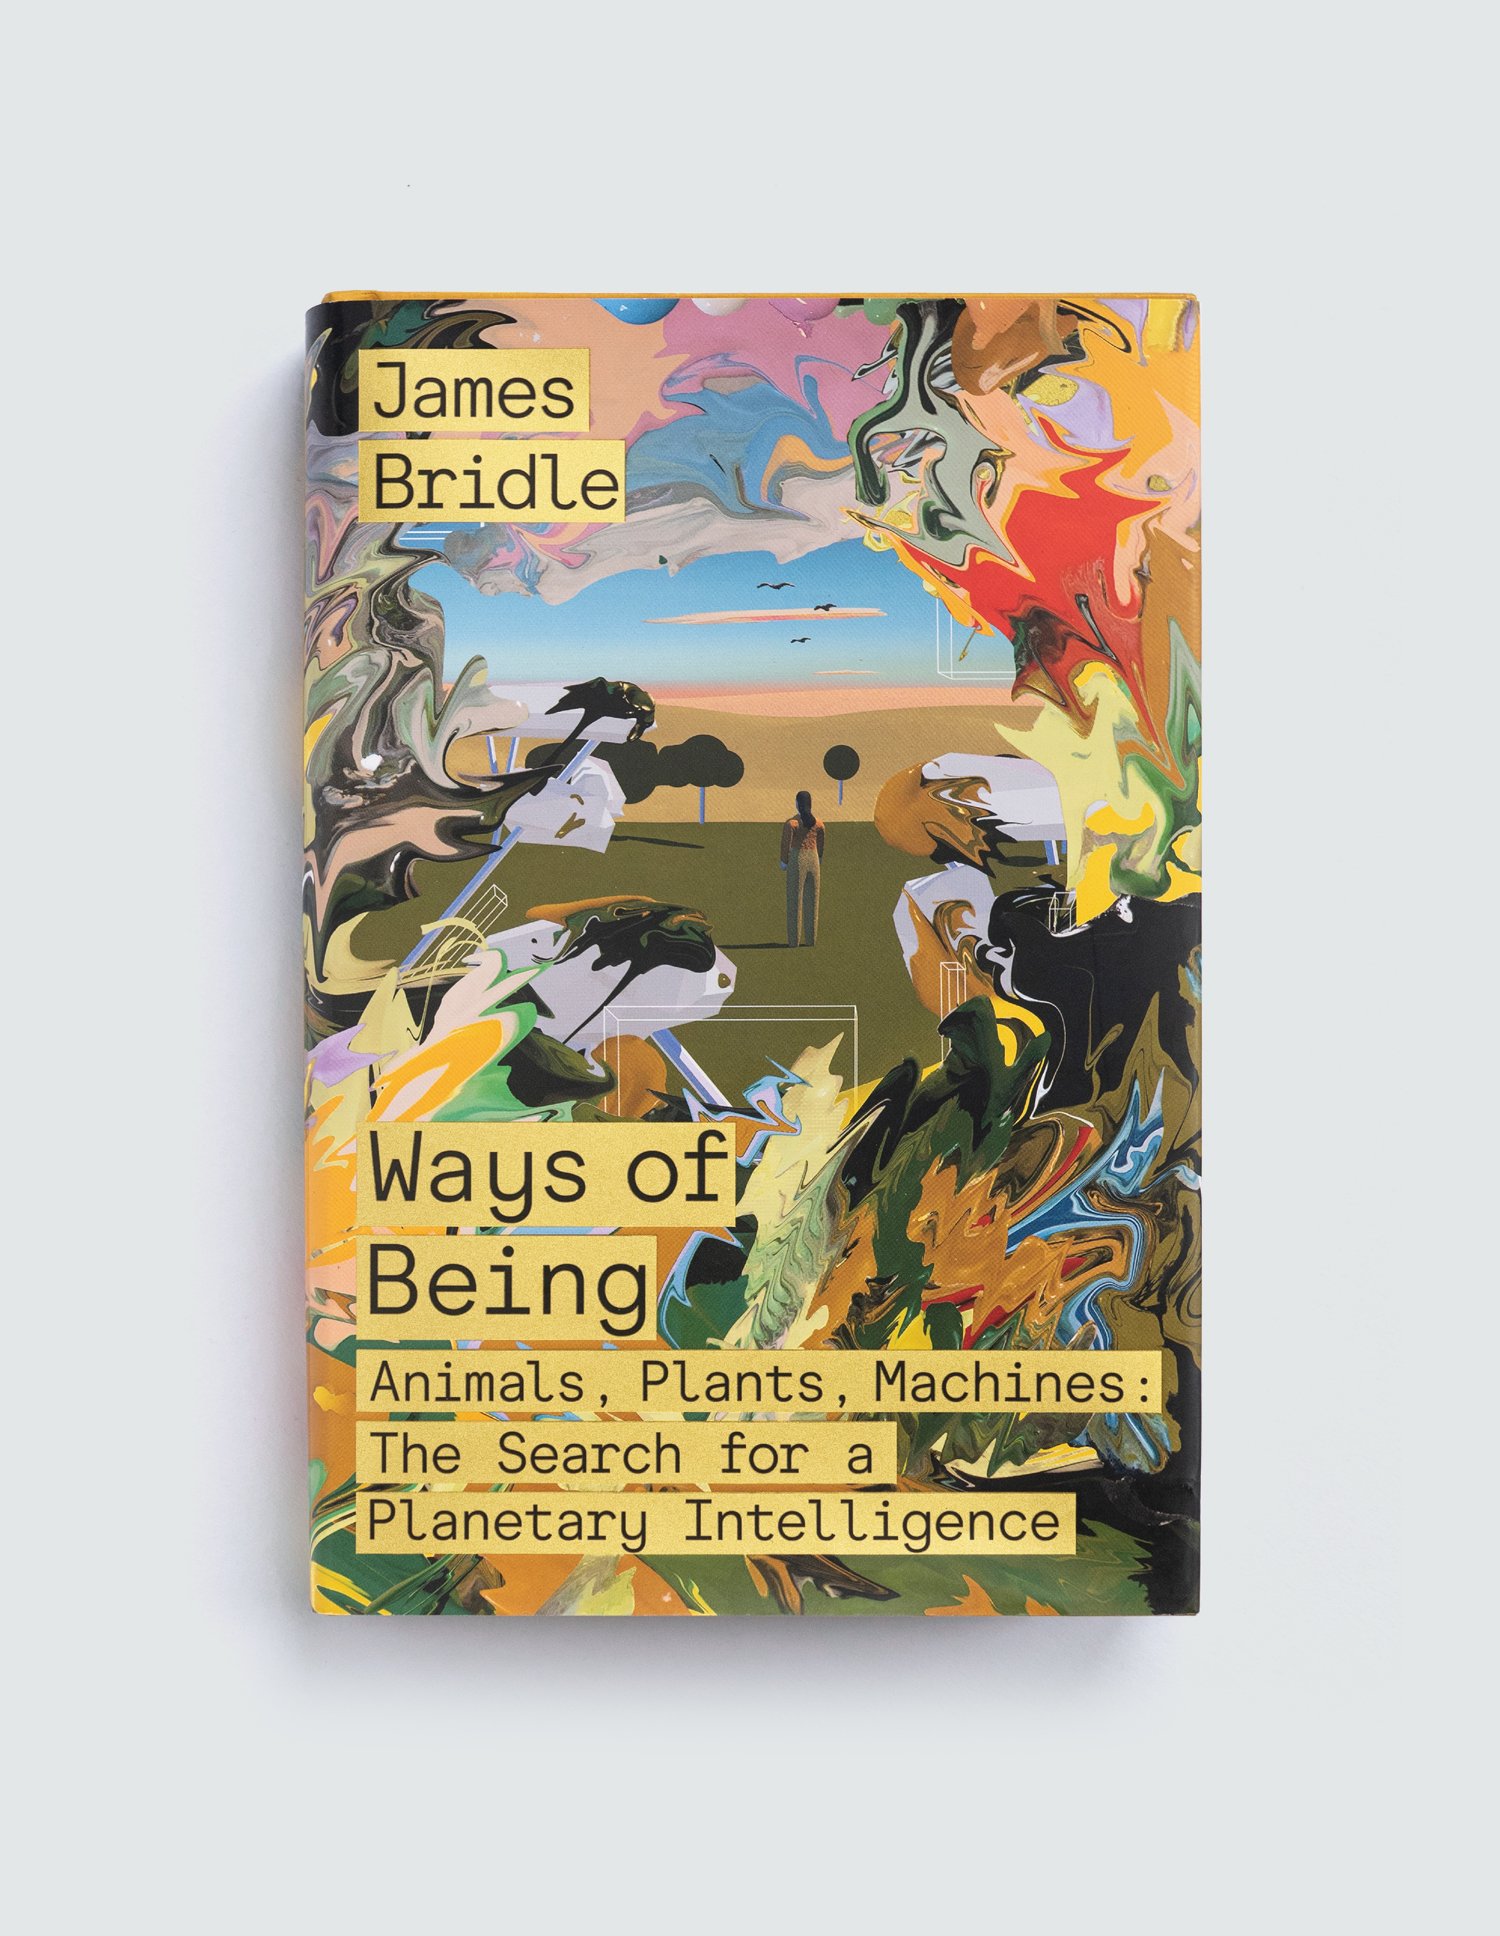 JAMES BRIDLE. FSG BOOKS. 2022. ILLUSTRATED BY JON HAN.